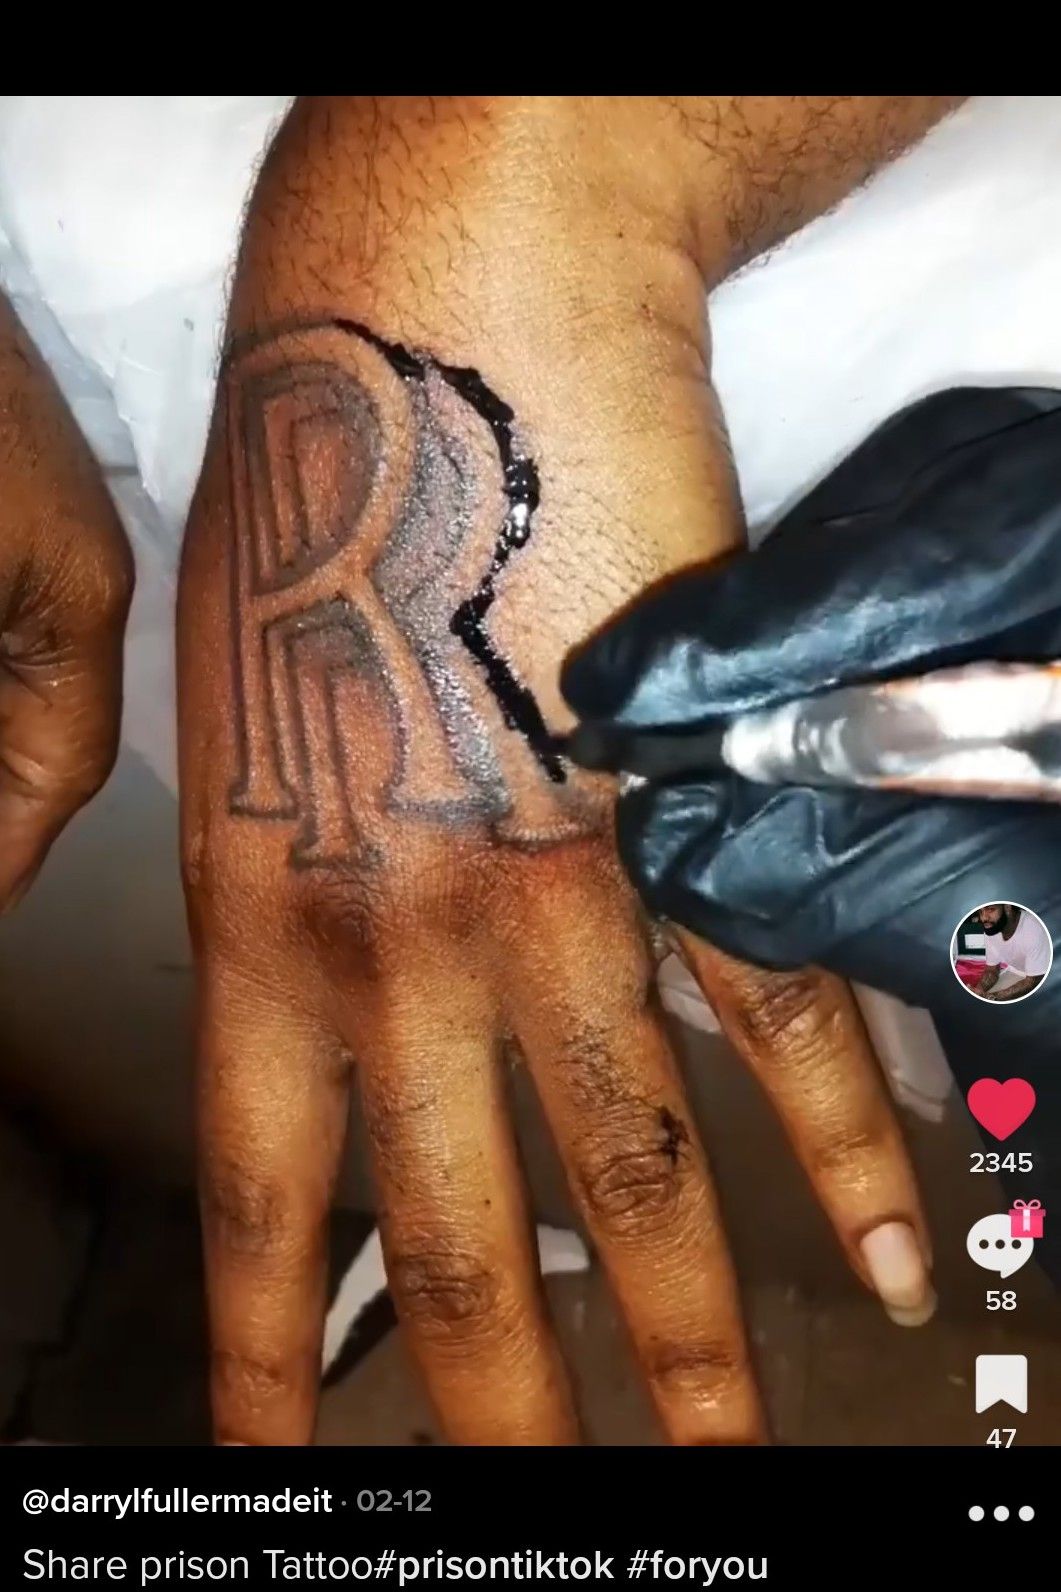 ratnesh nayak - Tattoo Artist - Rj Tattooist | LinkedIn